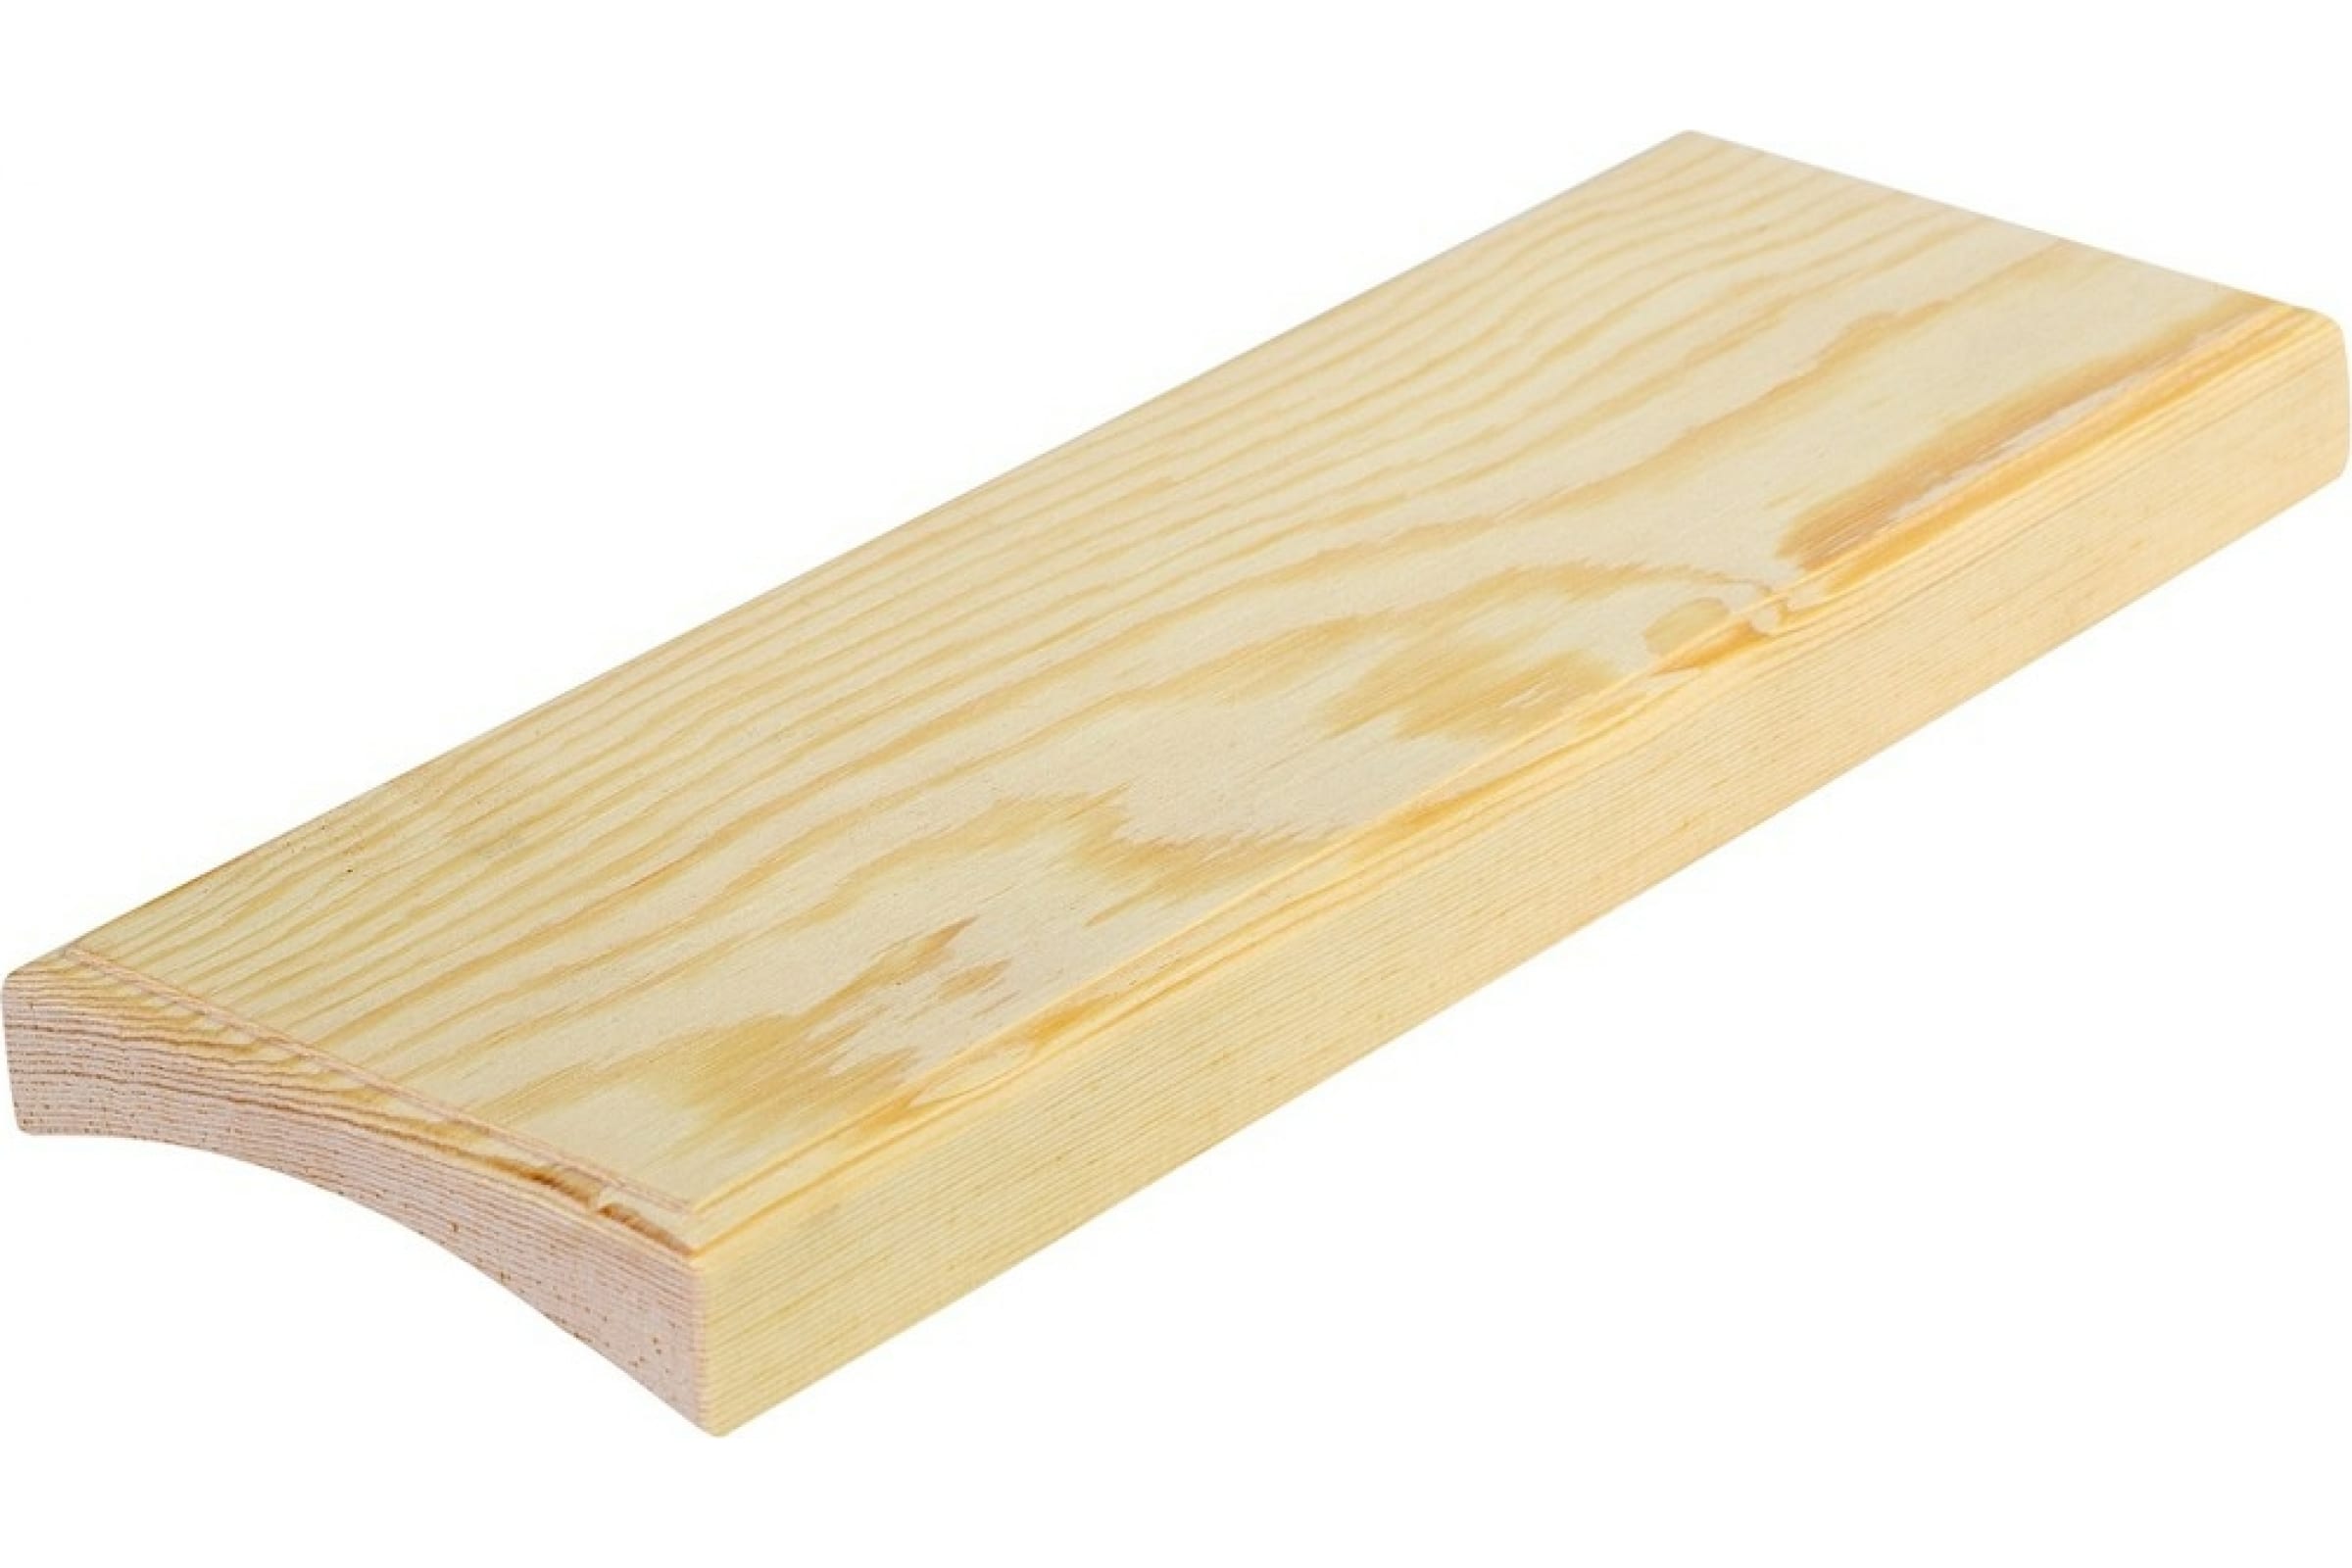 TDM Накладка на бревно деревянная универсальная НБУ 1Пх4 280 мм, под покраску SQ1821-0329 накладка на бревно деревянная универсальная 280 мм tdm sq1821 0038